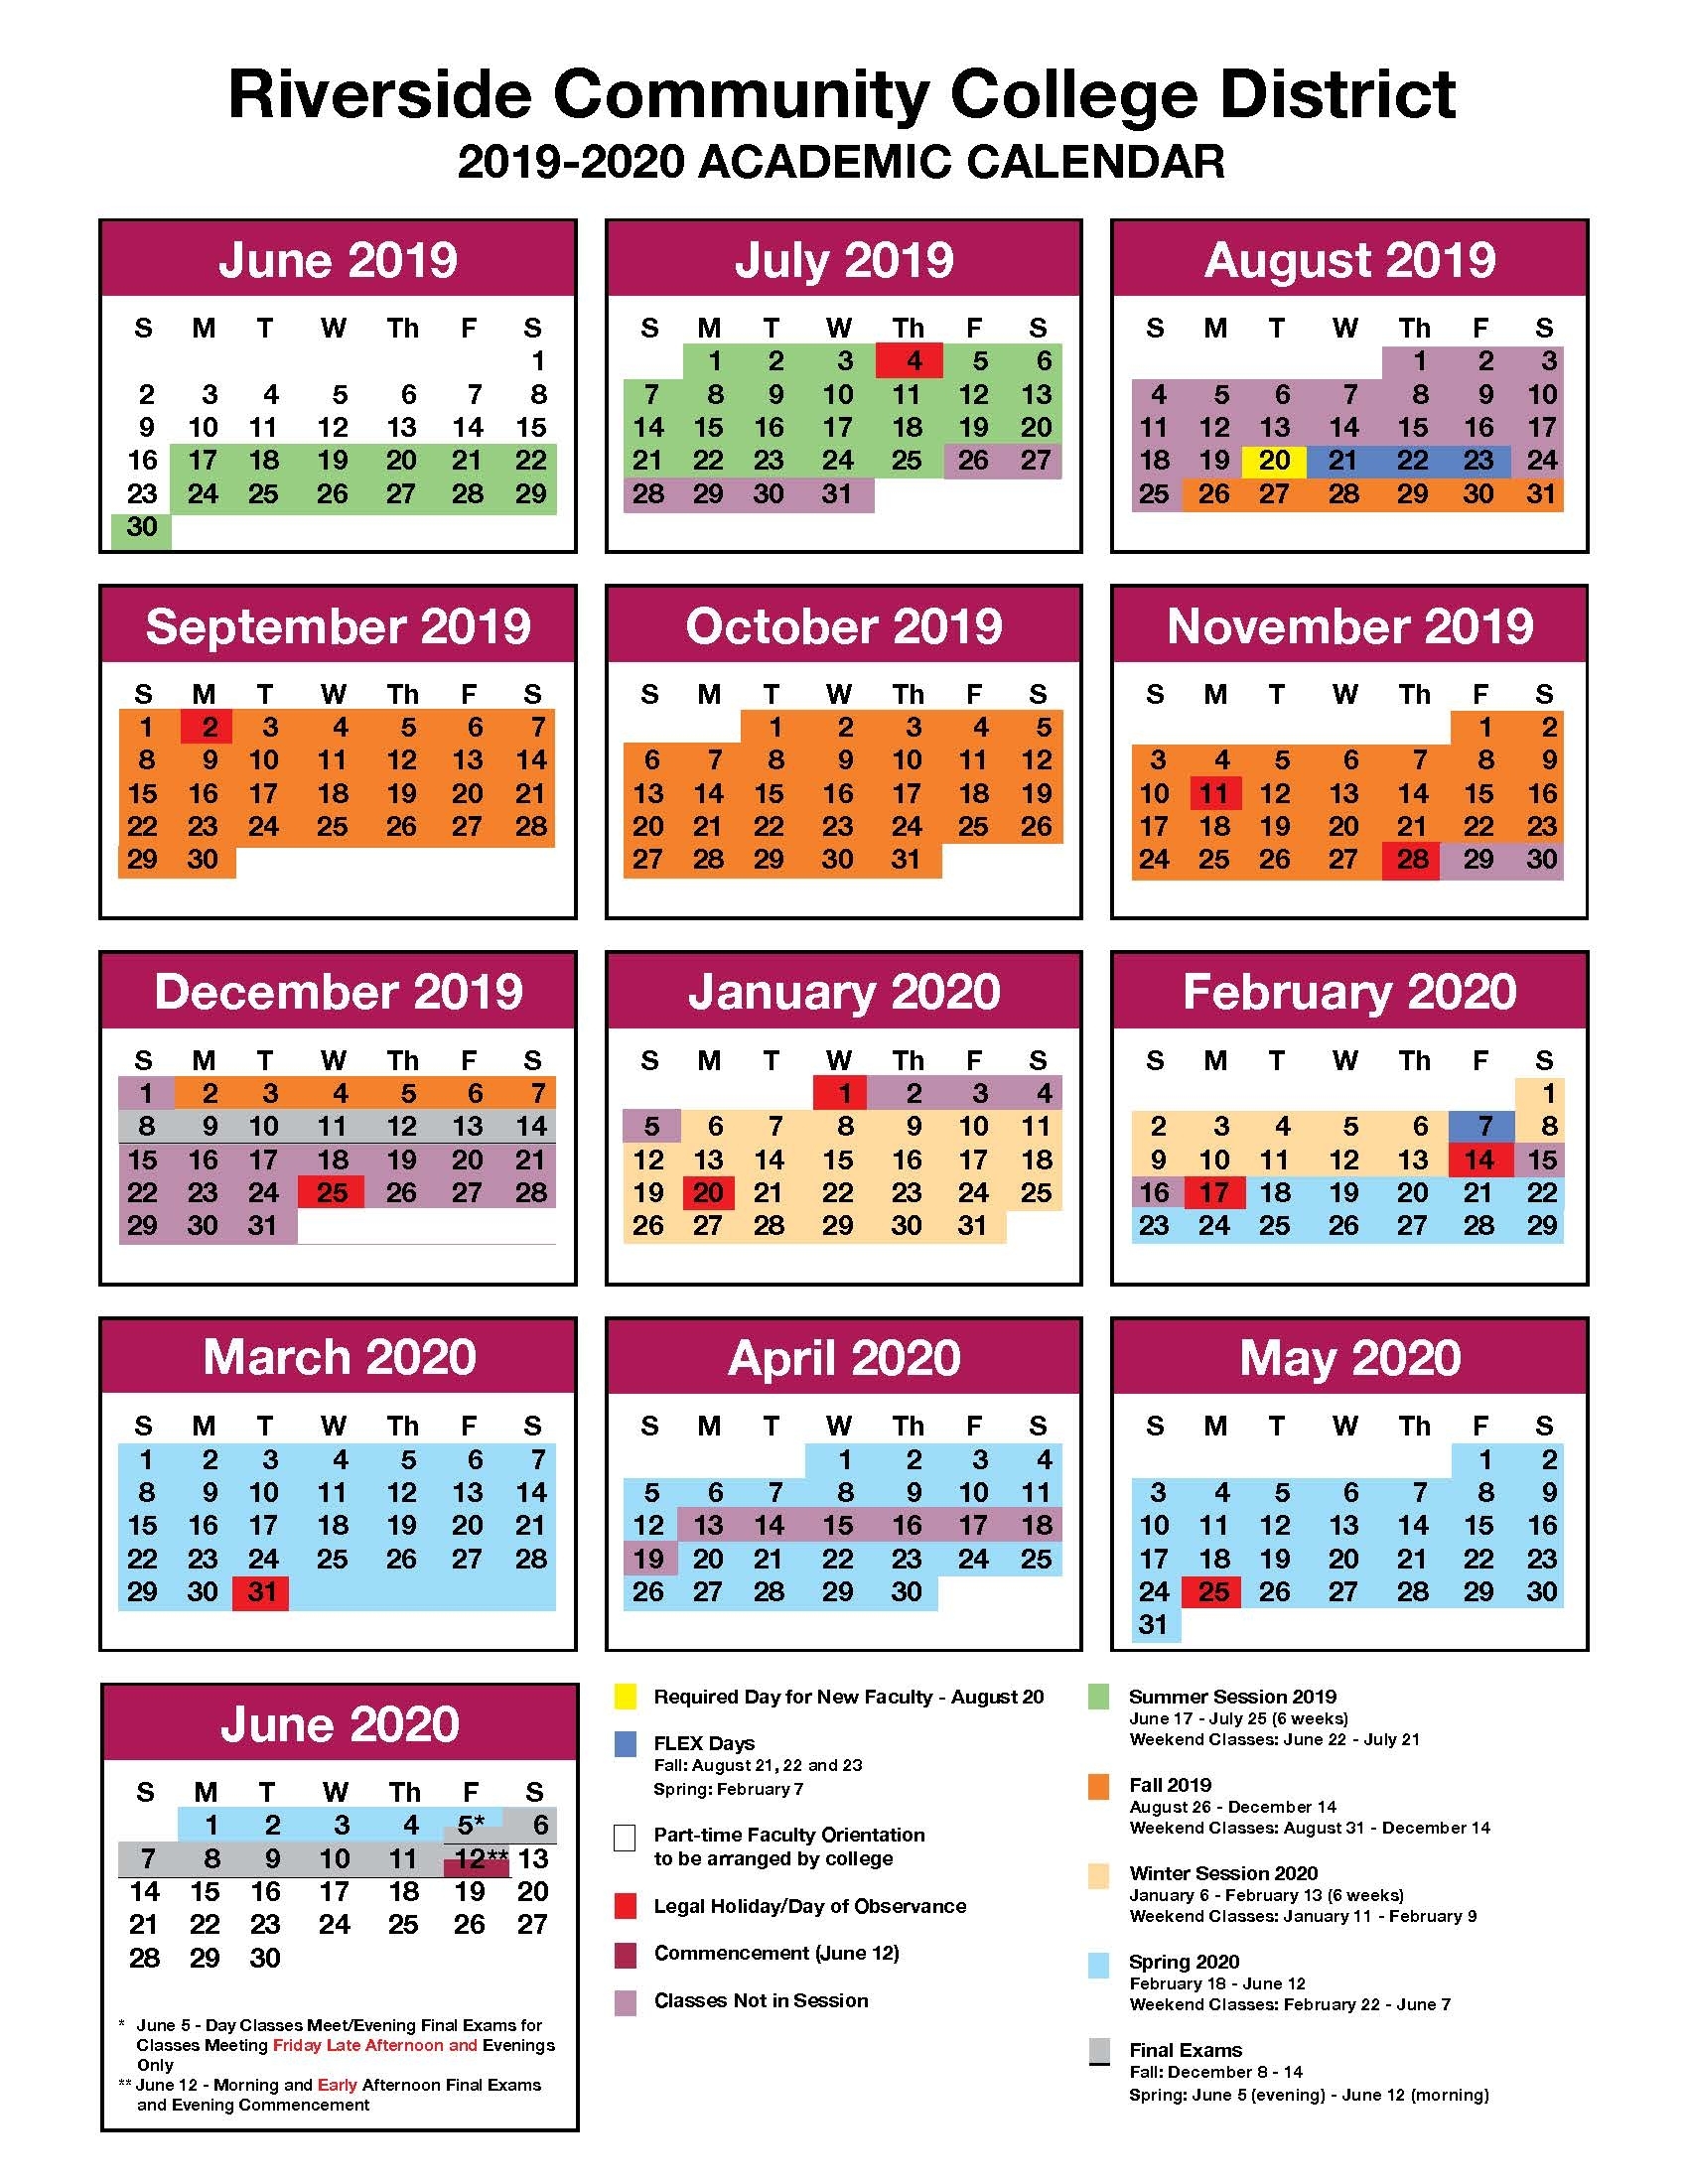 Jfk And Norco College Calendar 2019-2020 - John F. Kennedy